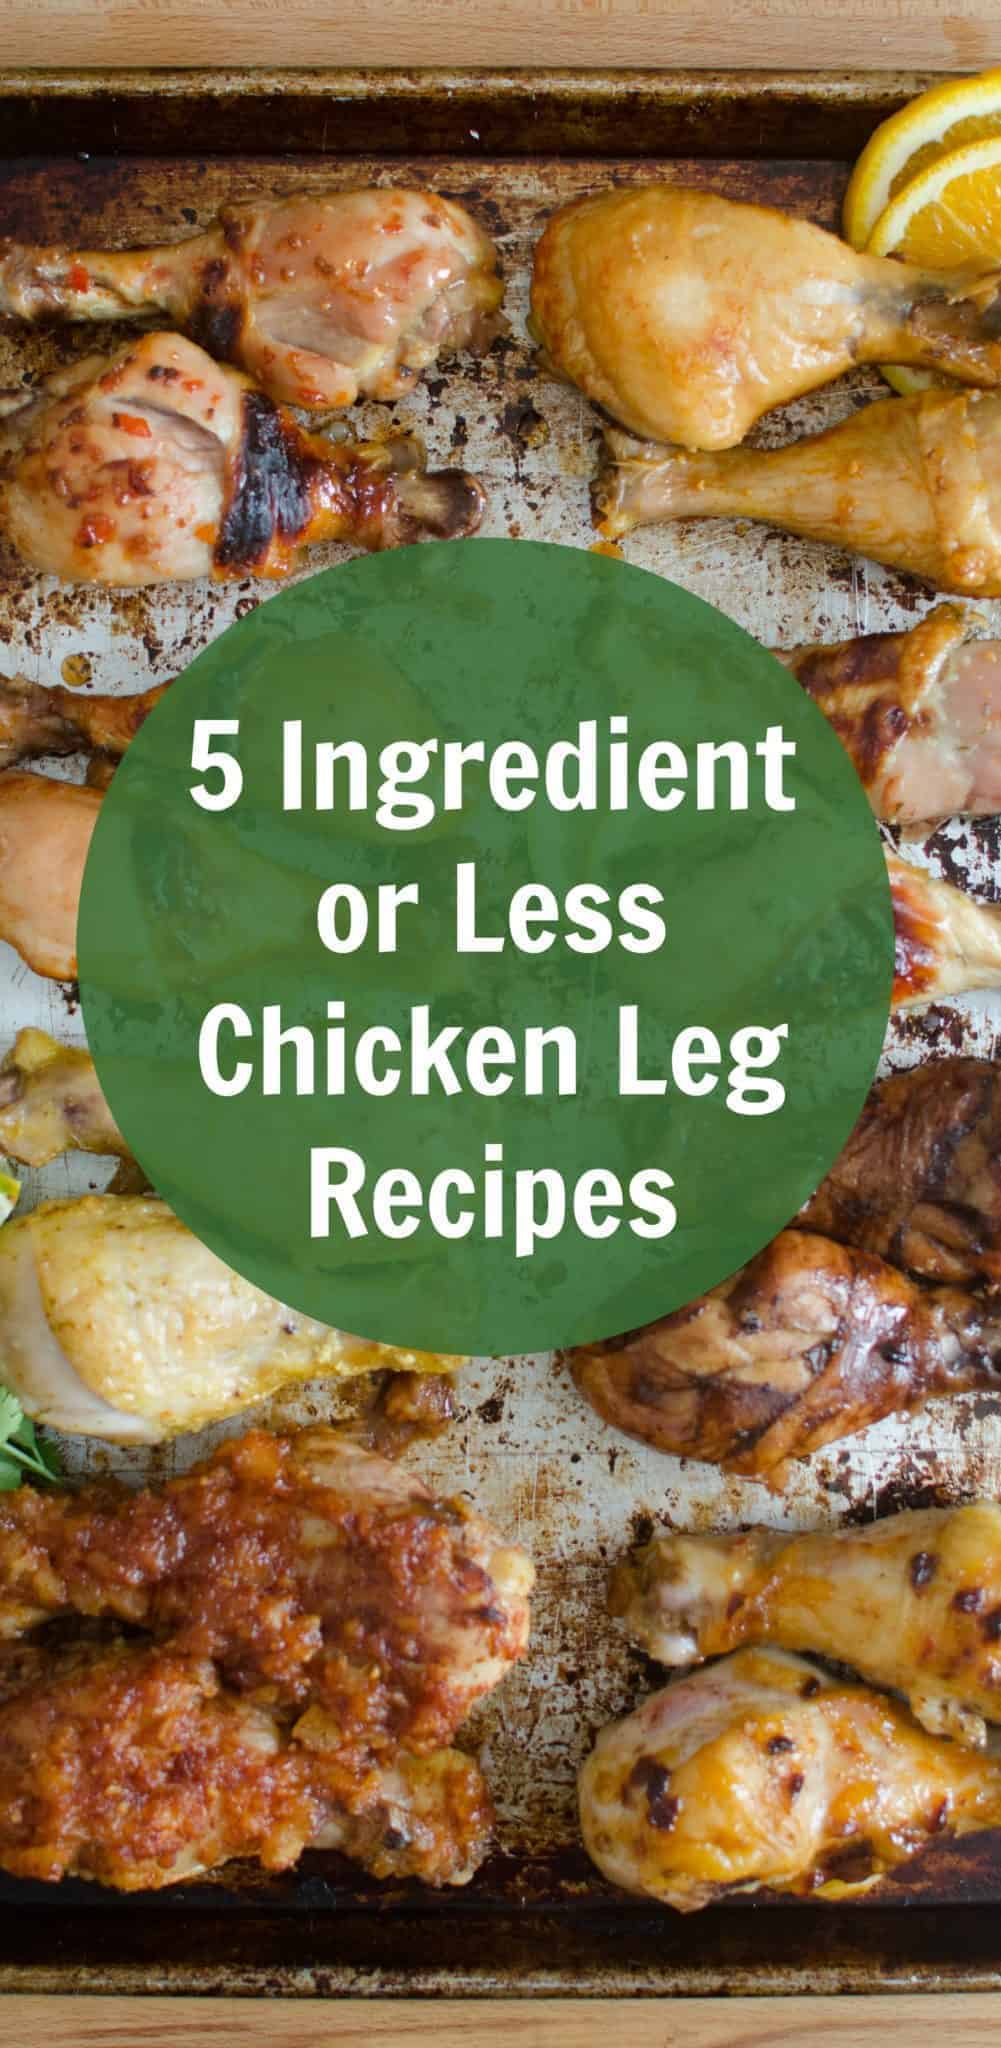 5 Ingredient or Less Chicken Leg Recipes